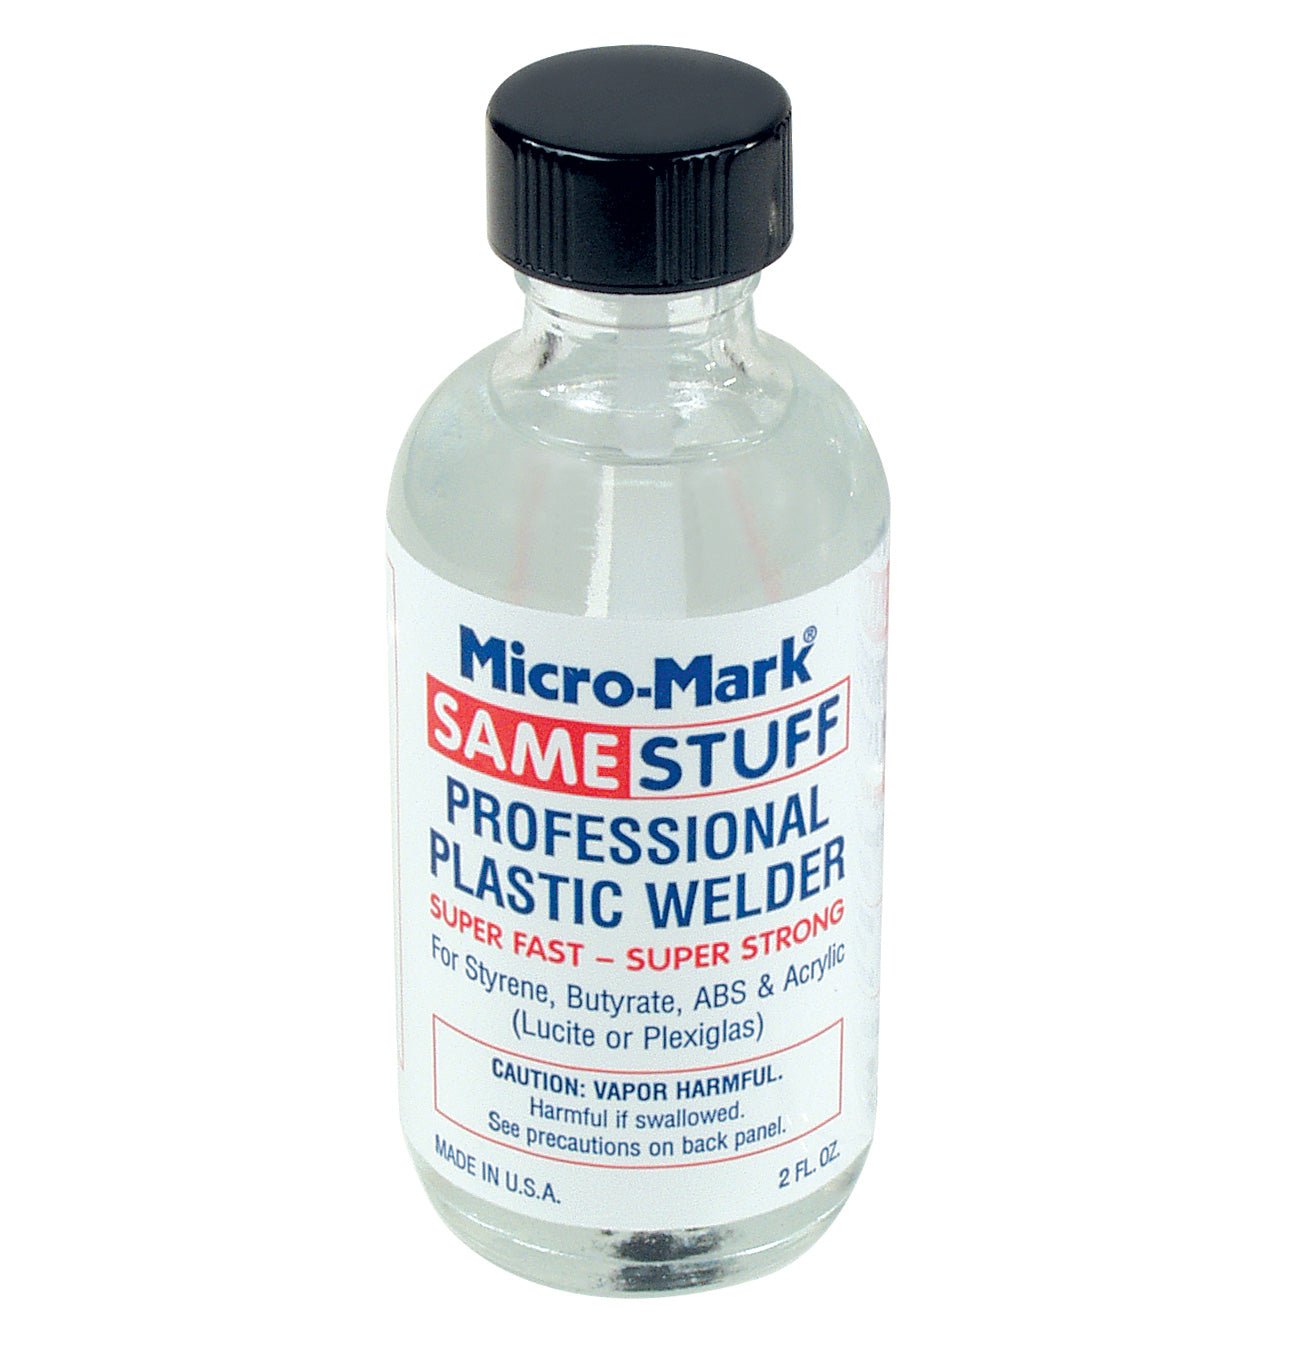 Micro - Mark® Same Stuff Professional Plastic Welder Refill, 2 fl. oz. - Micro - Mark Adhesives